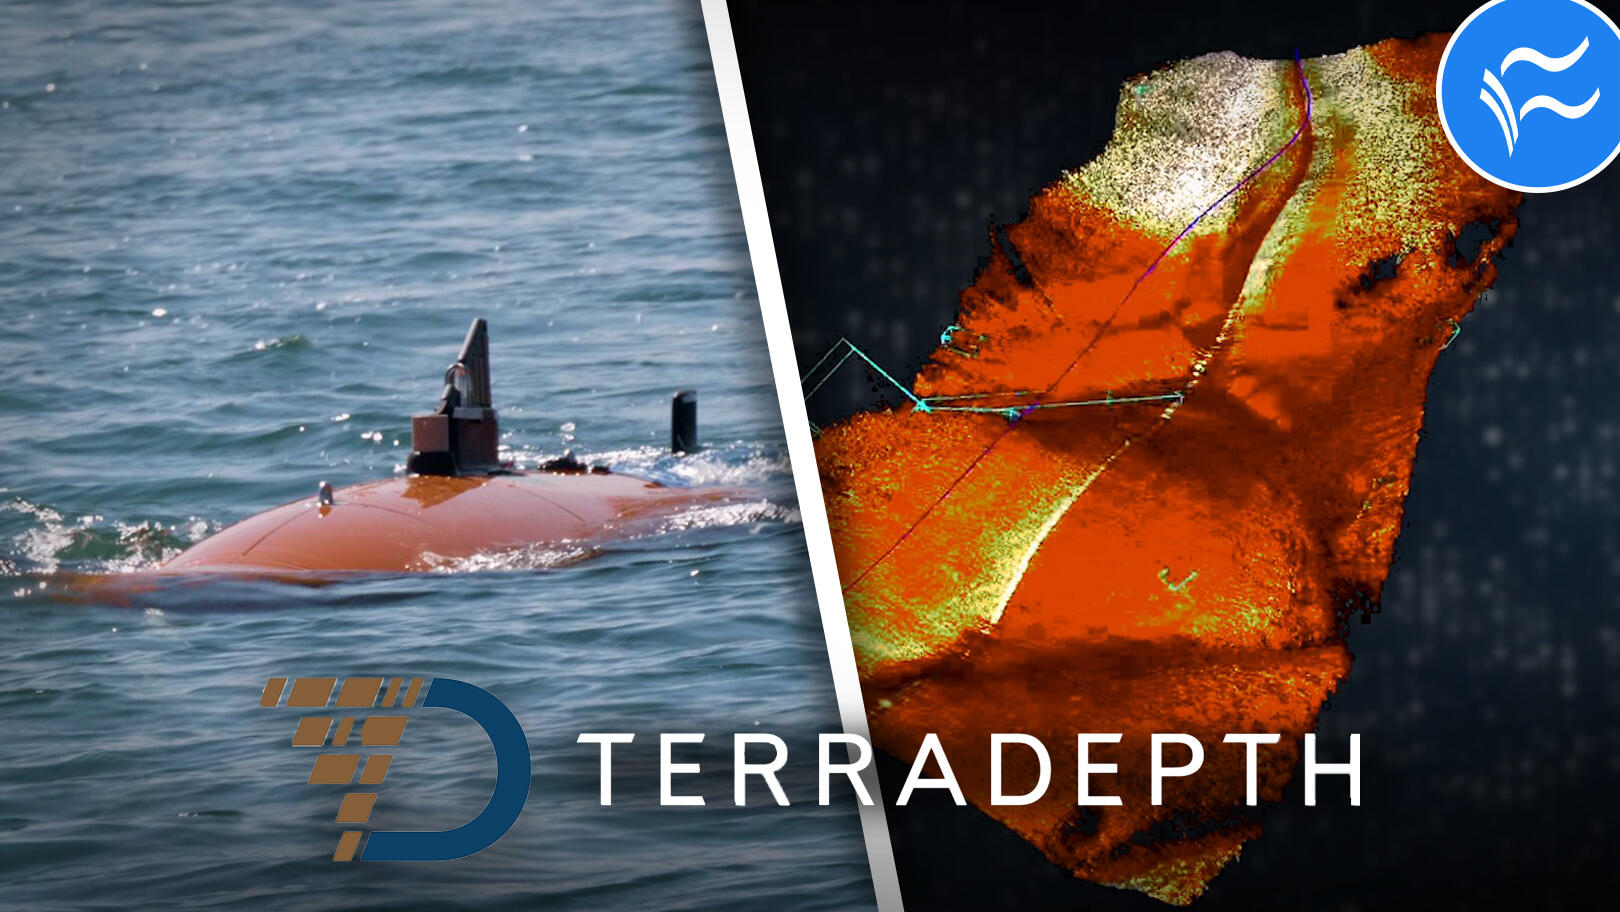 Diving robot: Autonomous submarine vessel goes deep to gain undersea knowledge